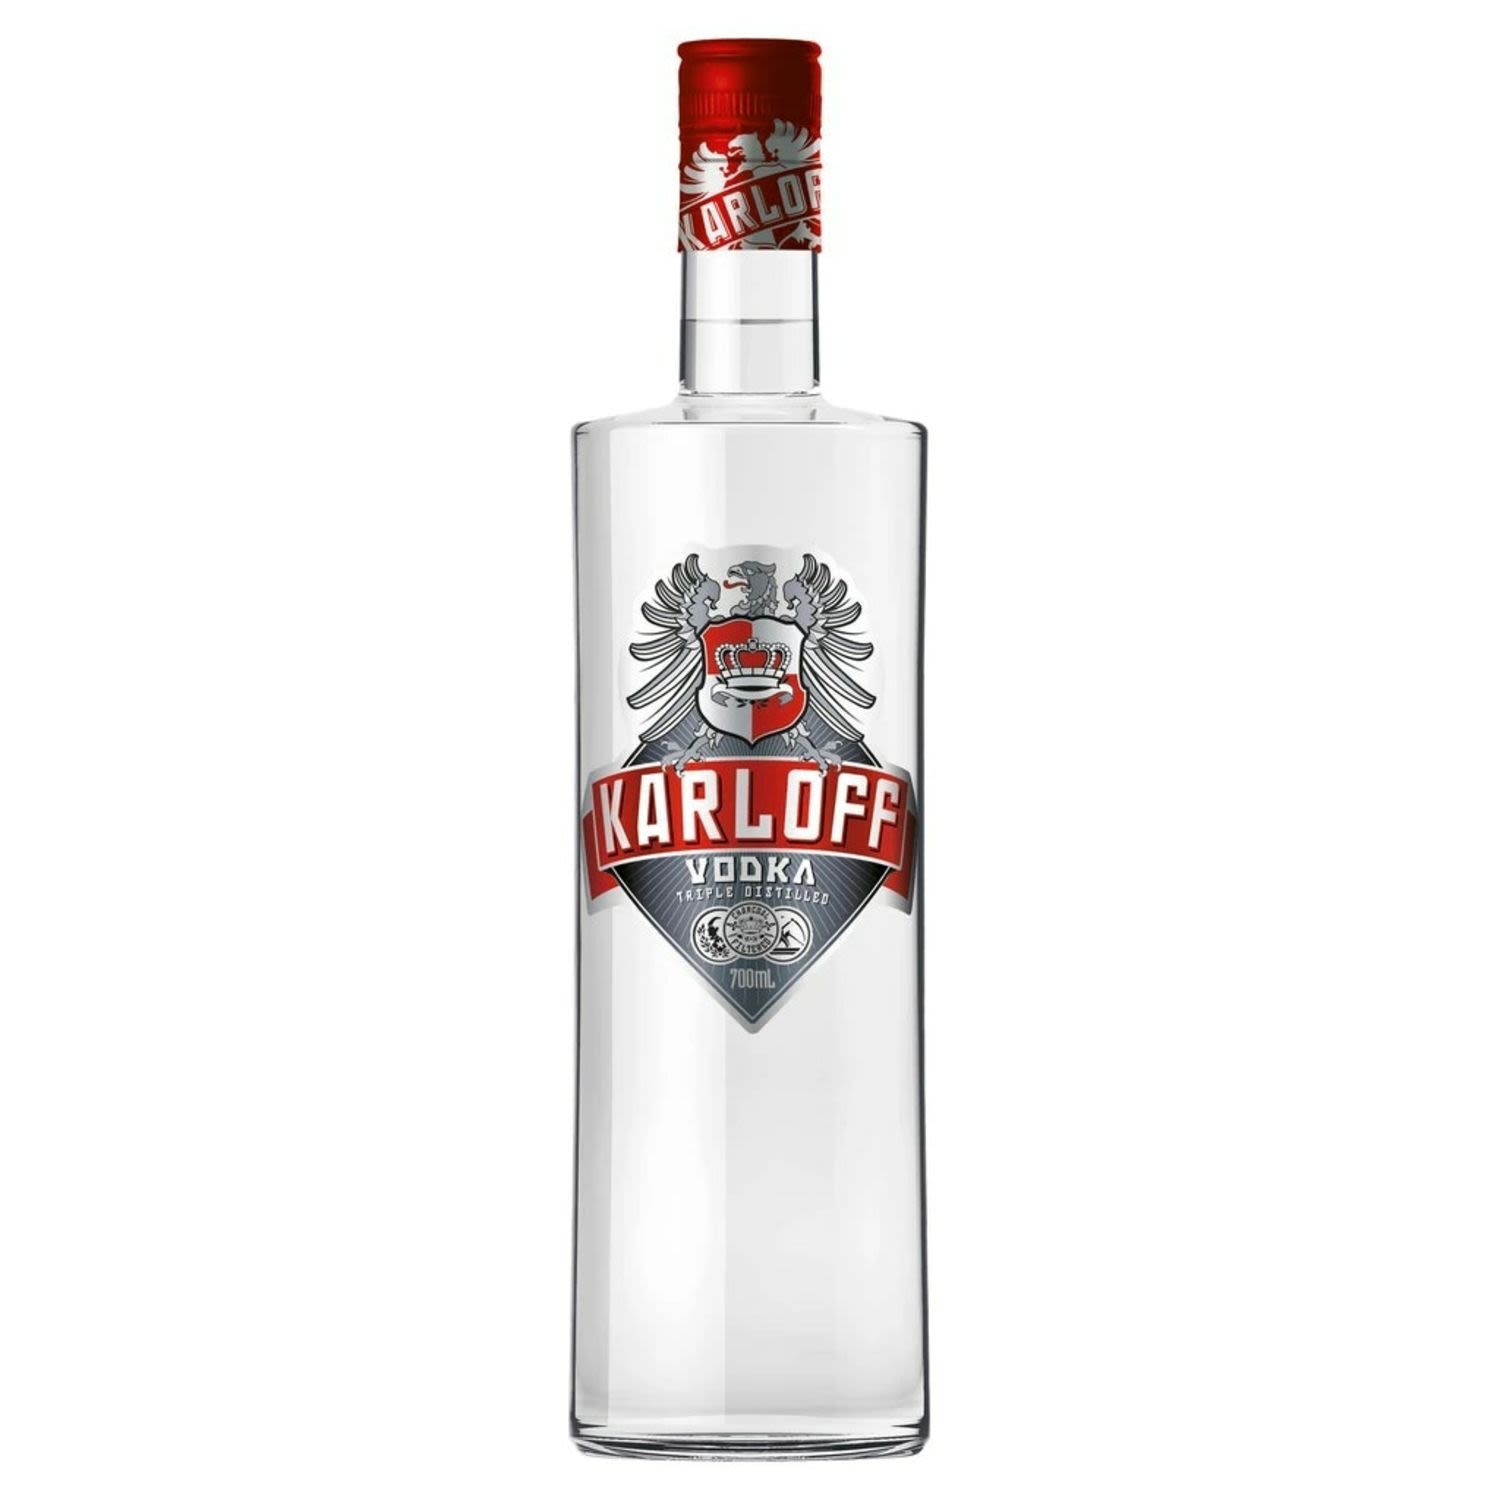 Karloff Vodka 700mL Bottle